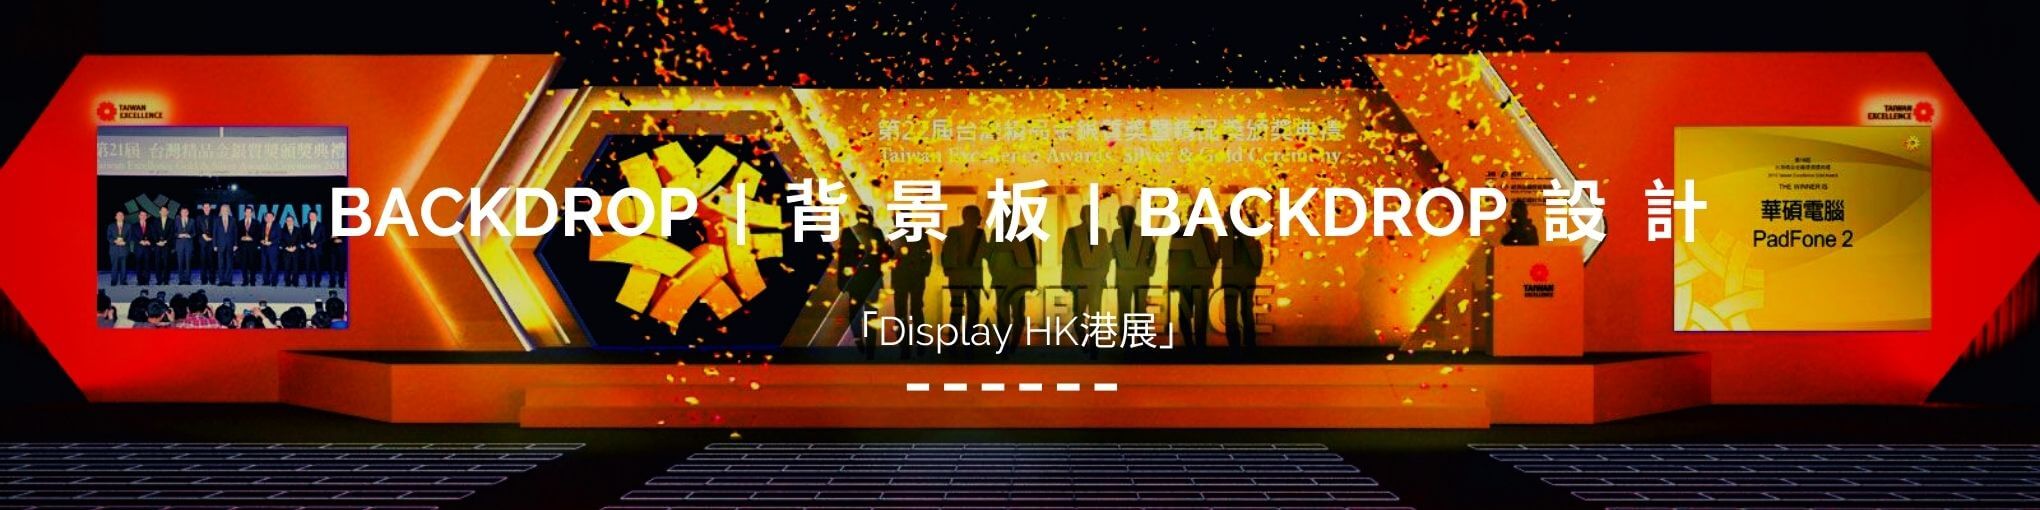 Backdrop, 背景板, Backdrop設計 - banner